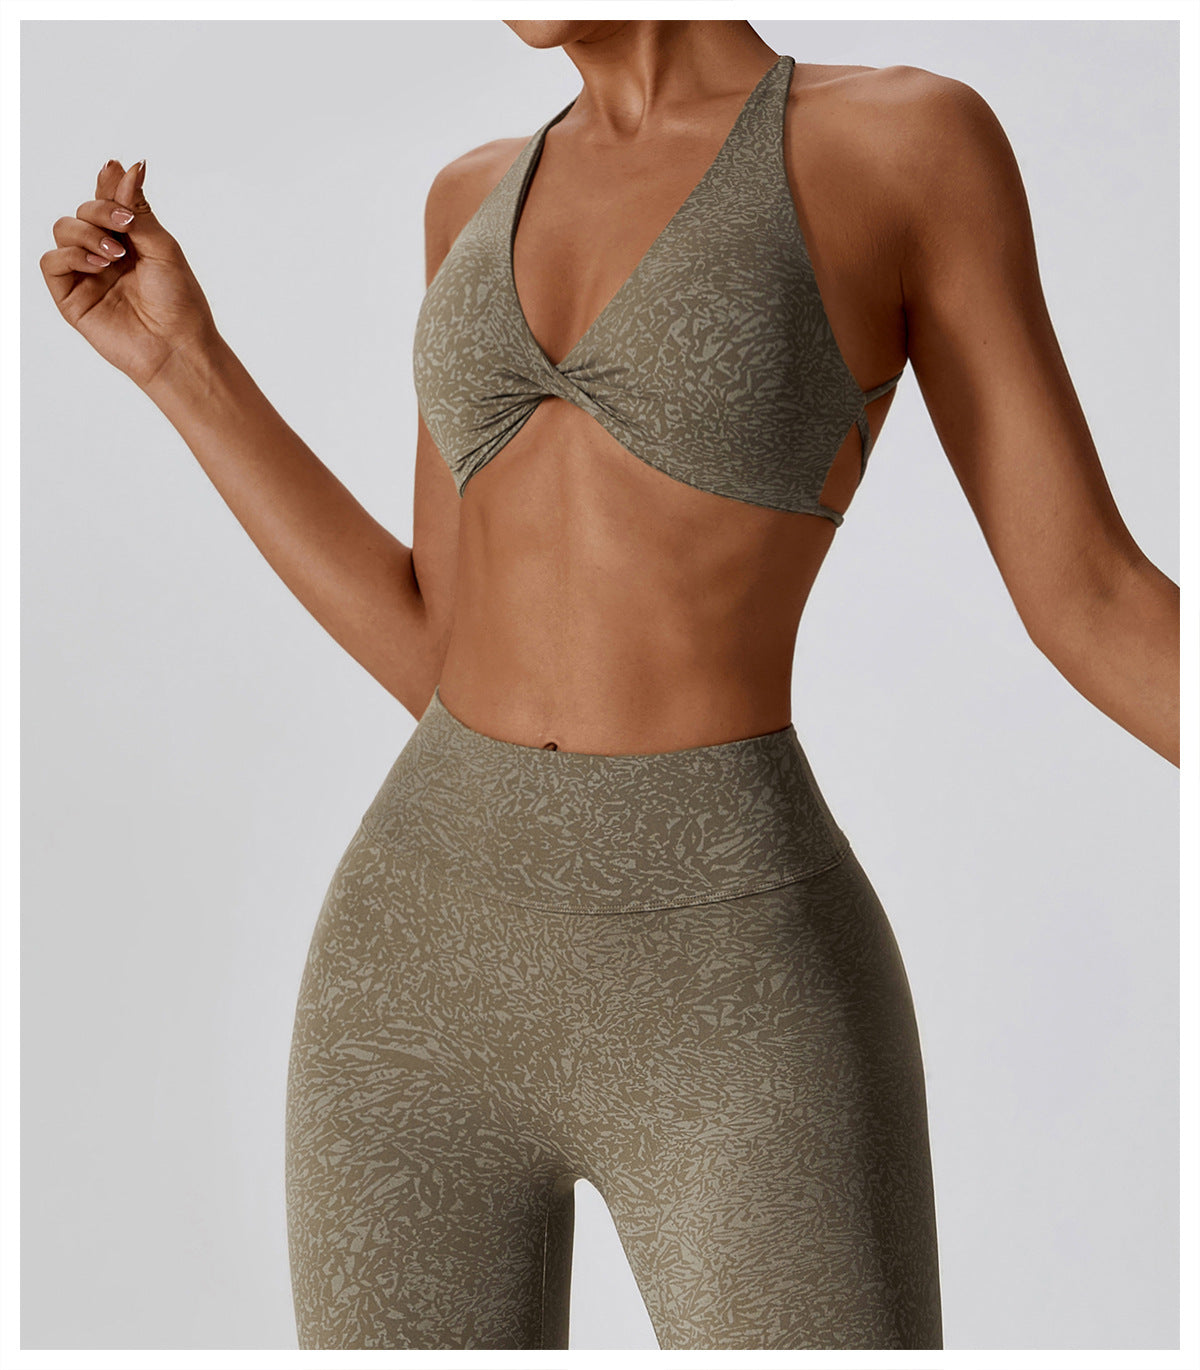 Printed sexy yoga bra tight sports underwear nude fitness yoga clothing 8256